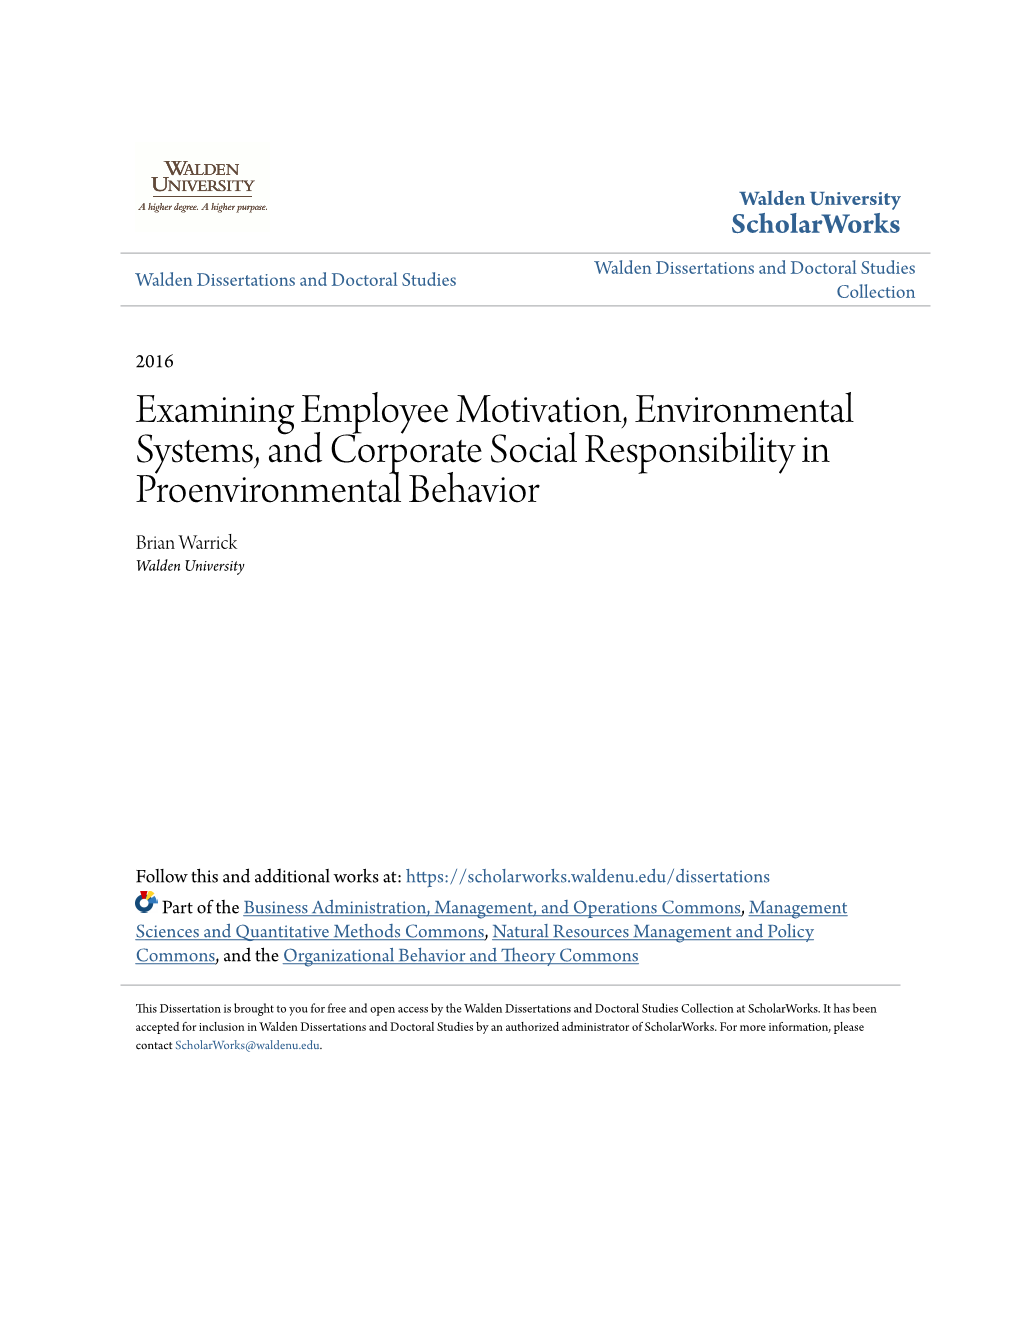 Examining Employee Motivation, Environmental Systems, and Corporate Social Responsibility in Proenvironmental Behavior Brian Warrick Walden University